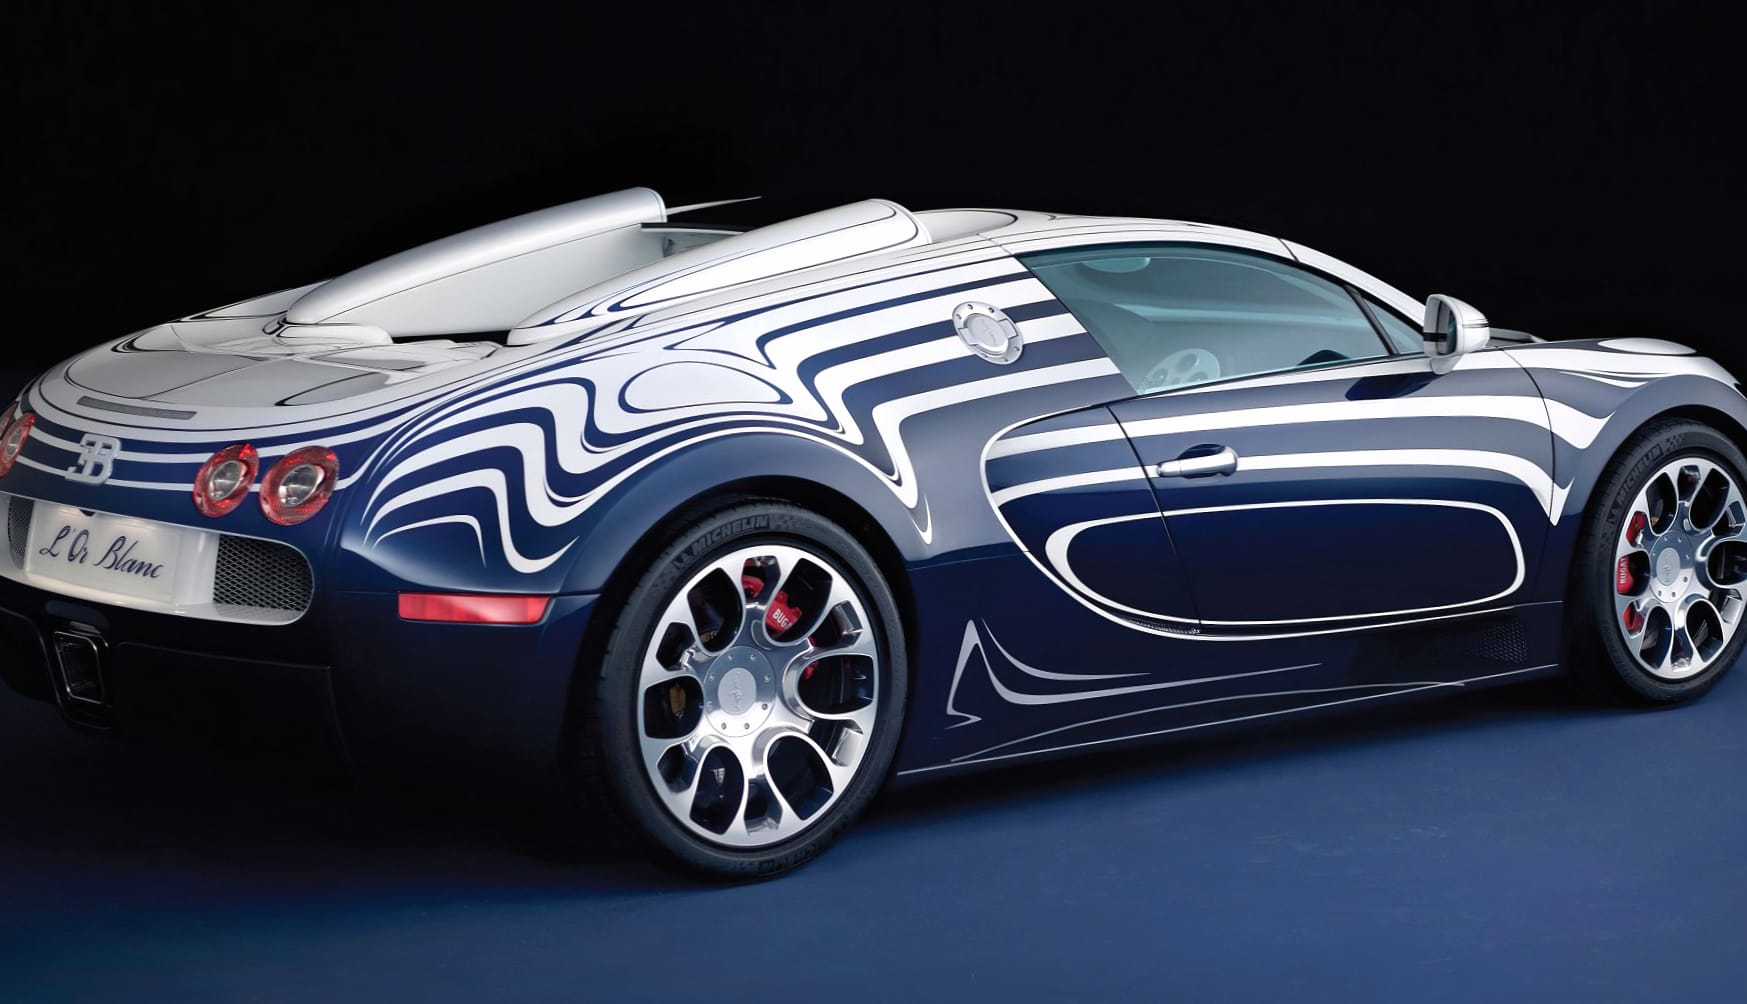 Bugatti Veyron Grand Sport LOr Blanc at 1280 x 960 size wallpapers HD quality